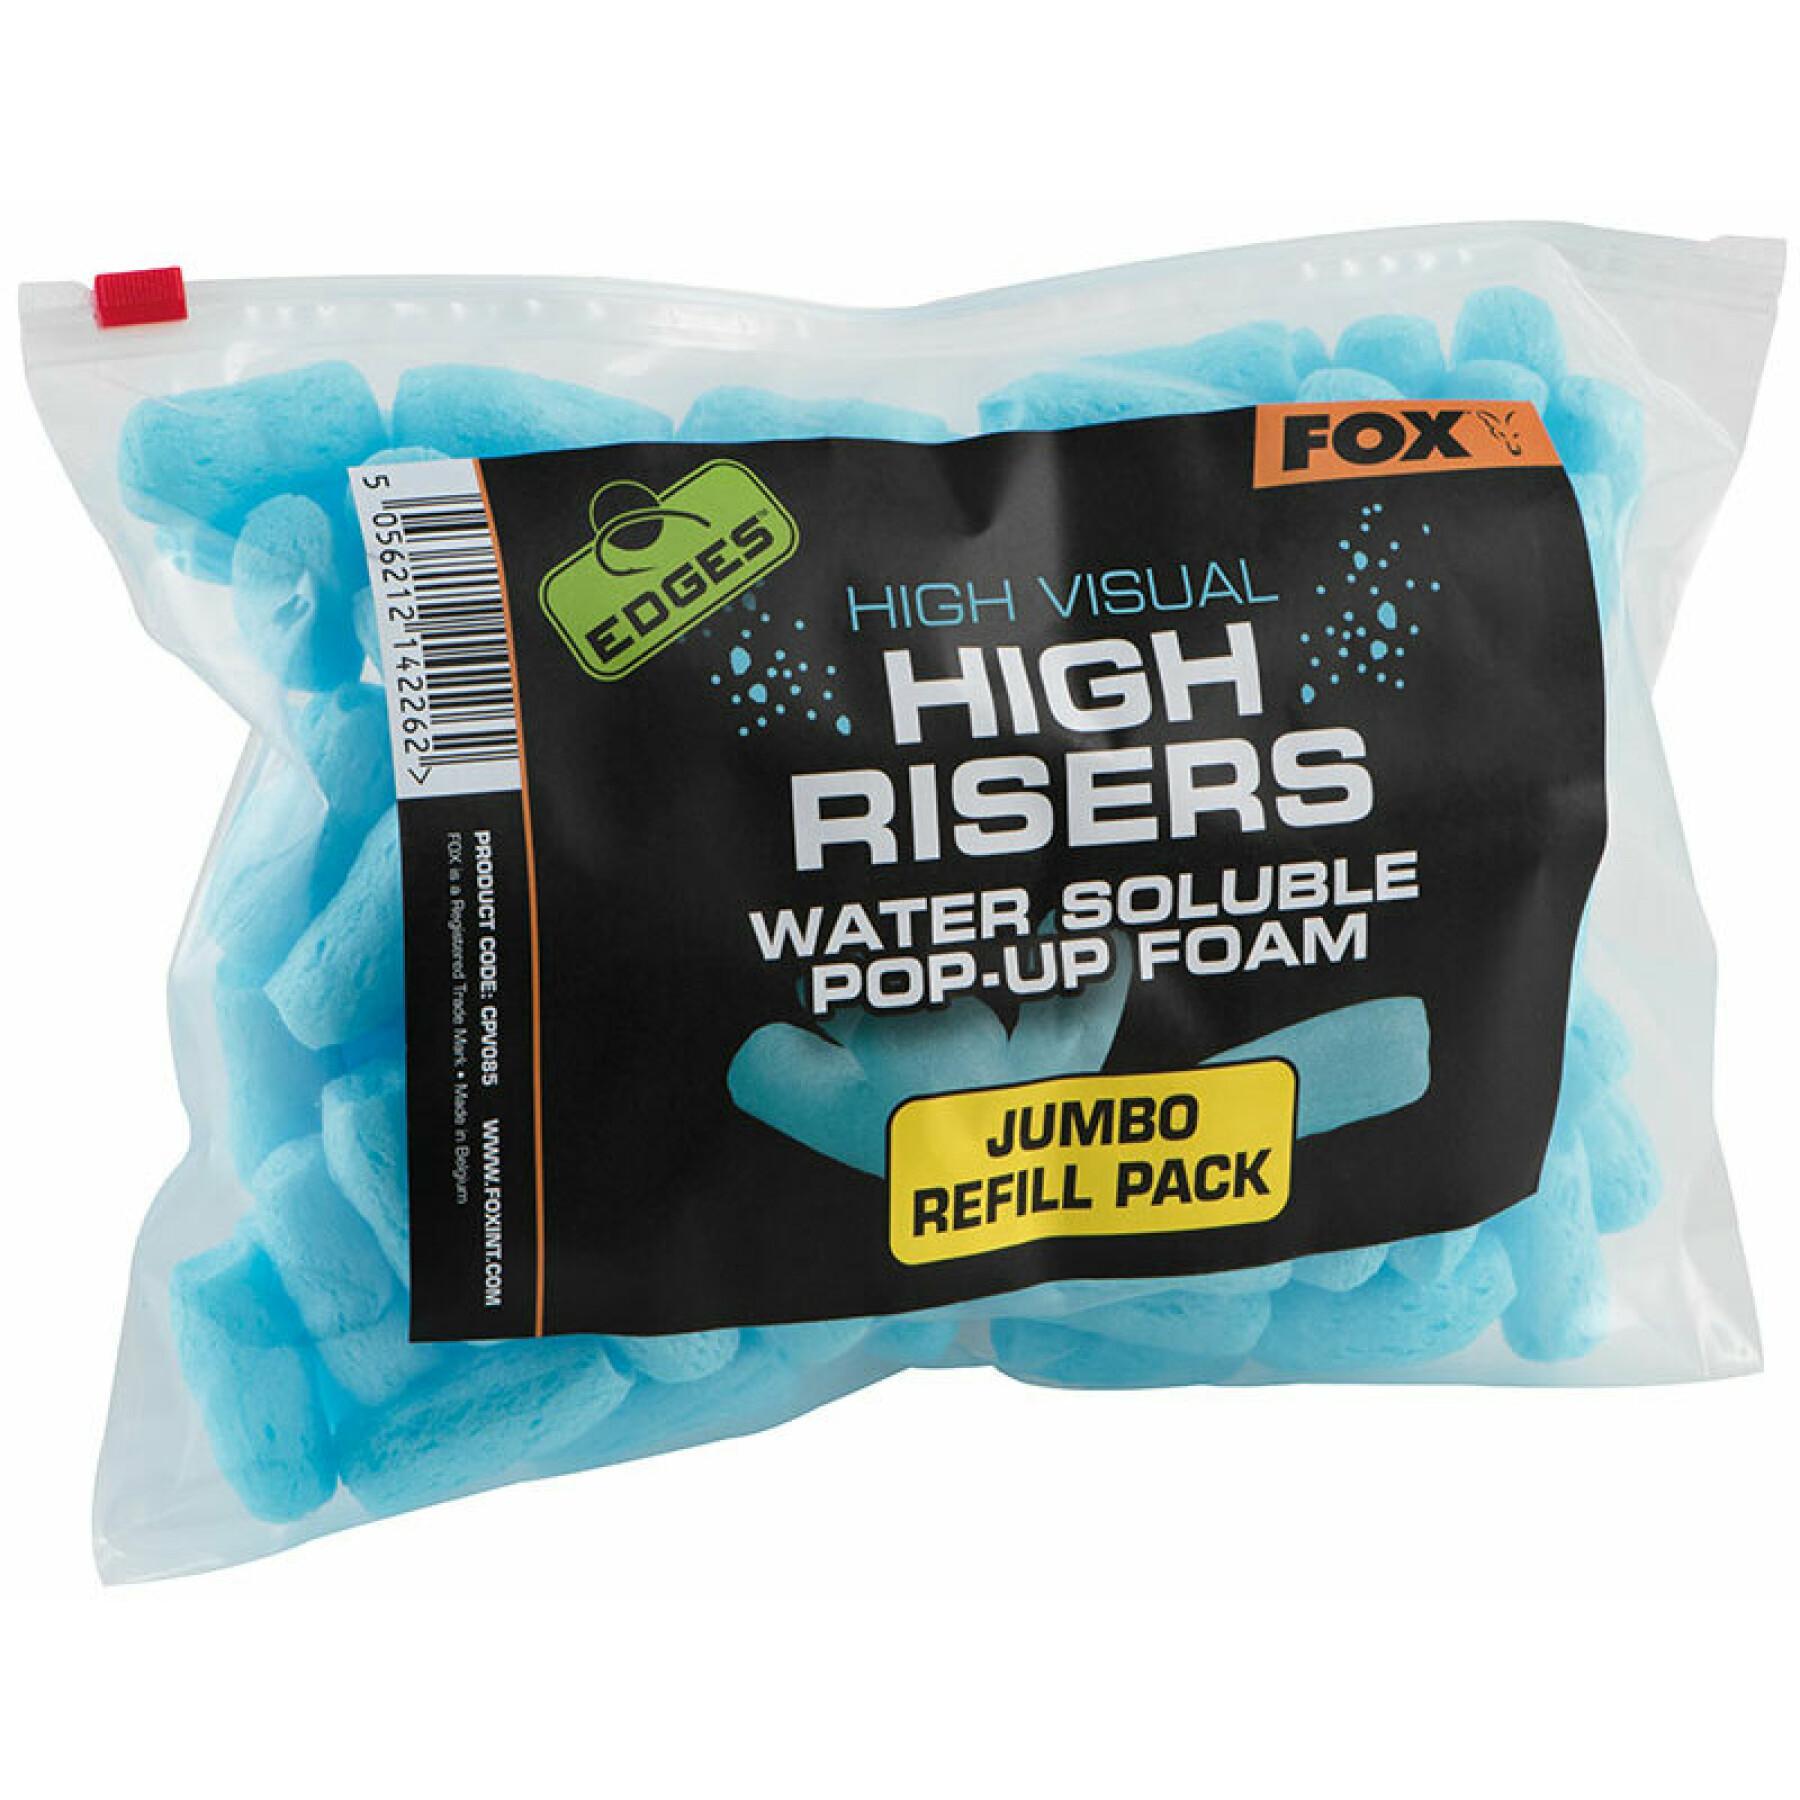 Schiuma Fox High Visual High Risers Jumbo Refill Pack